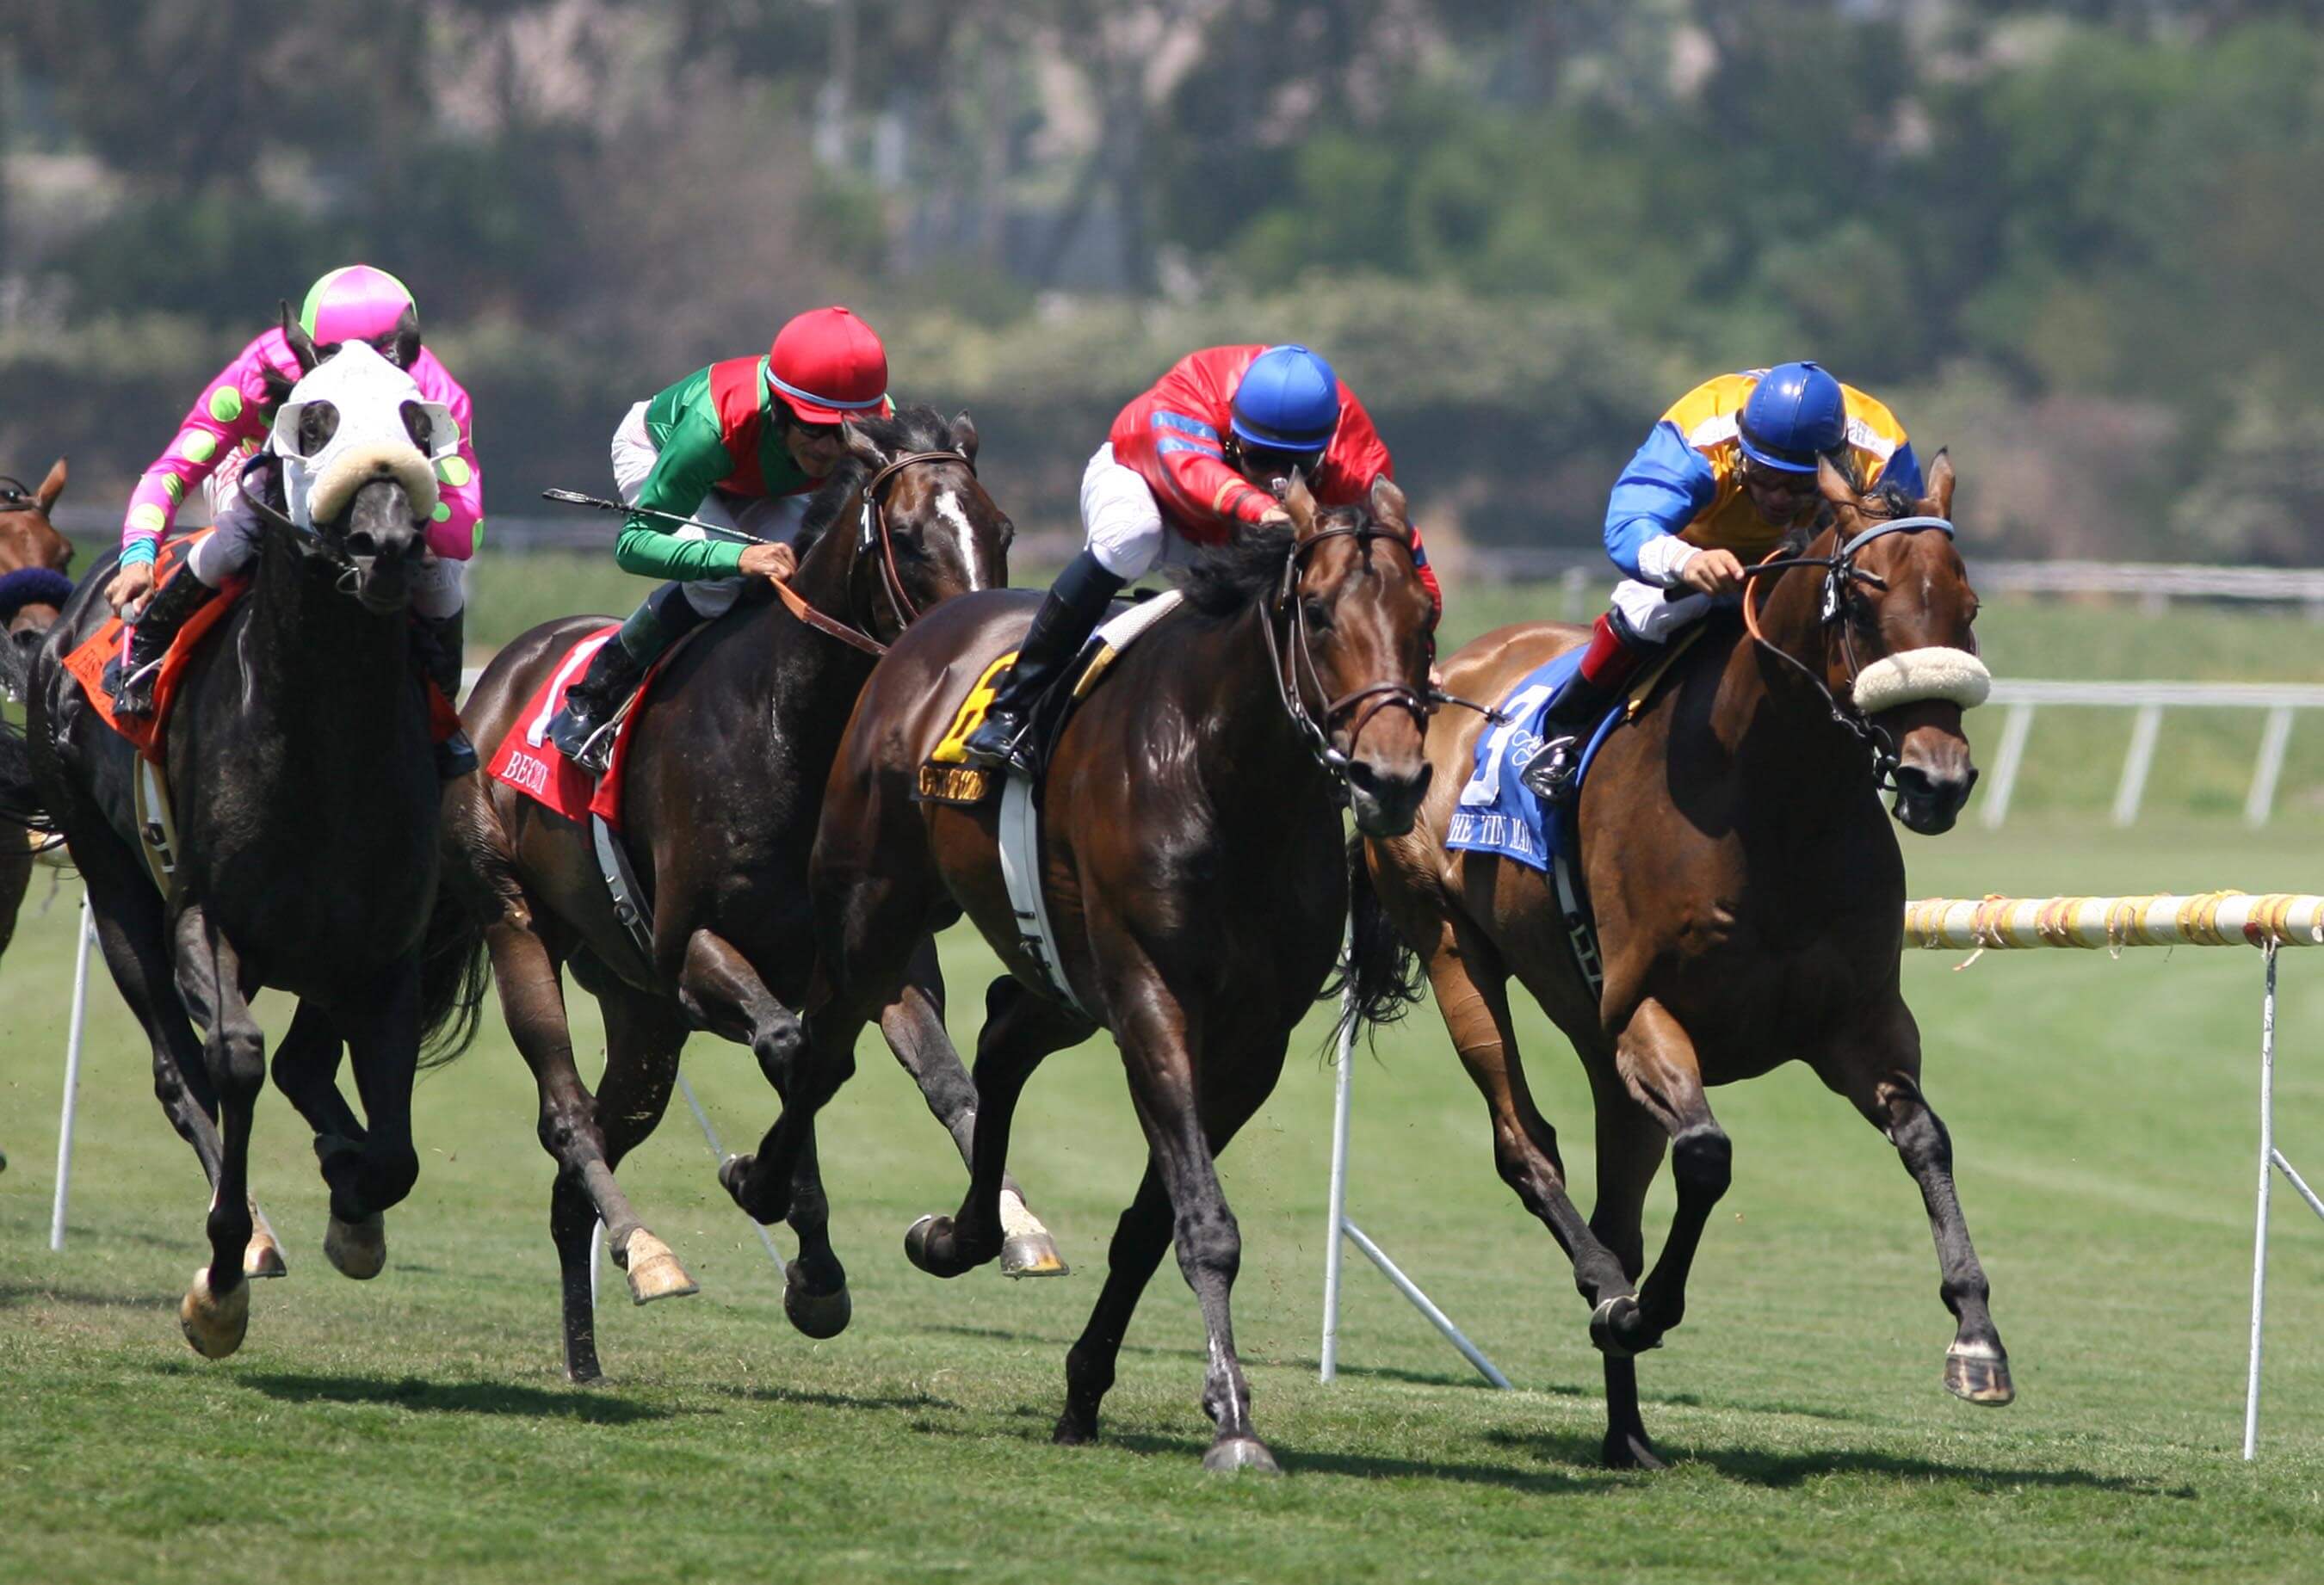 horse racing gambling